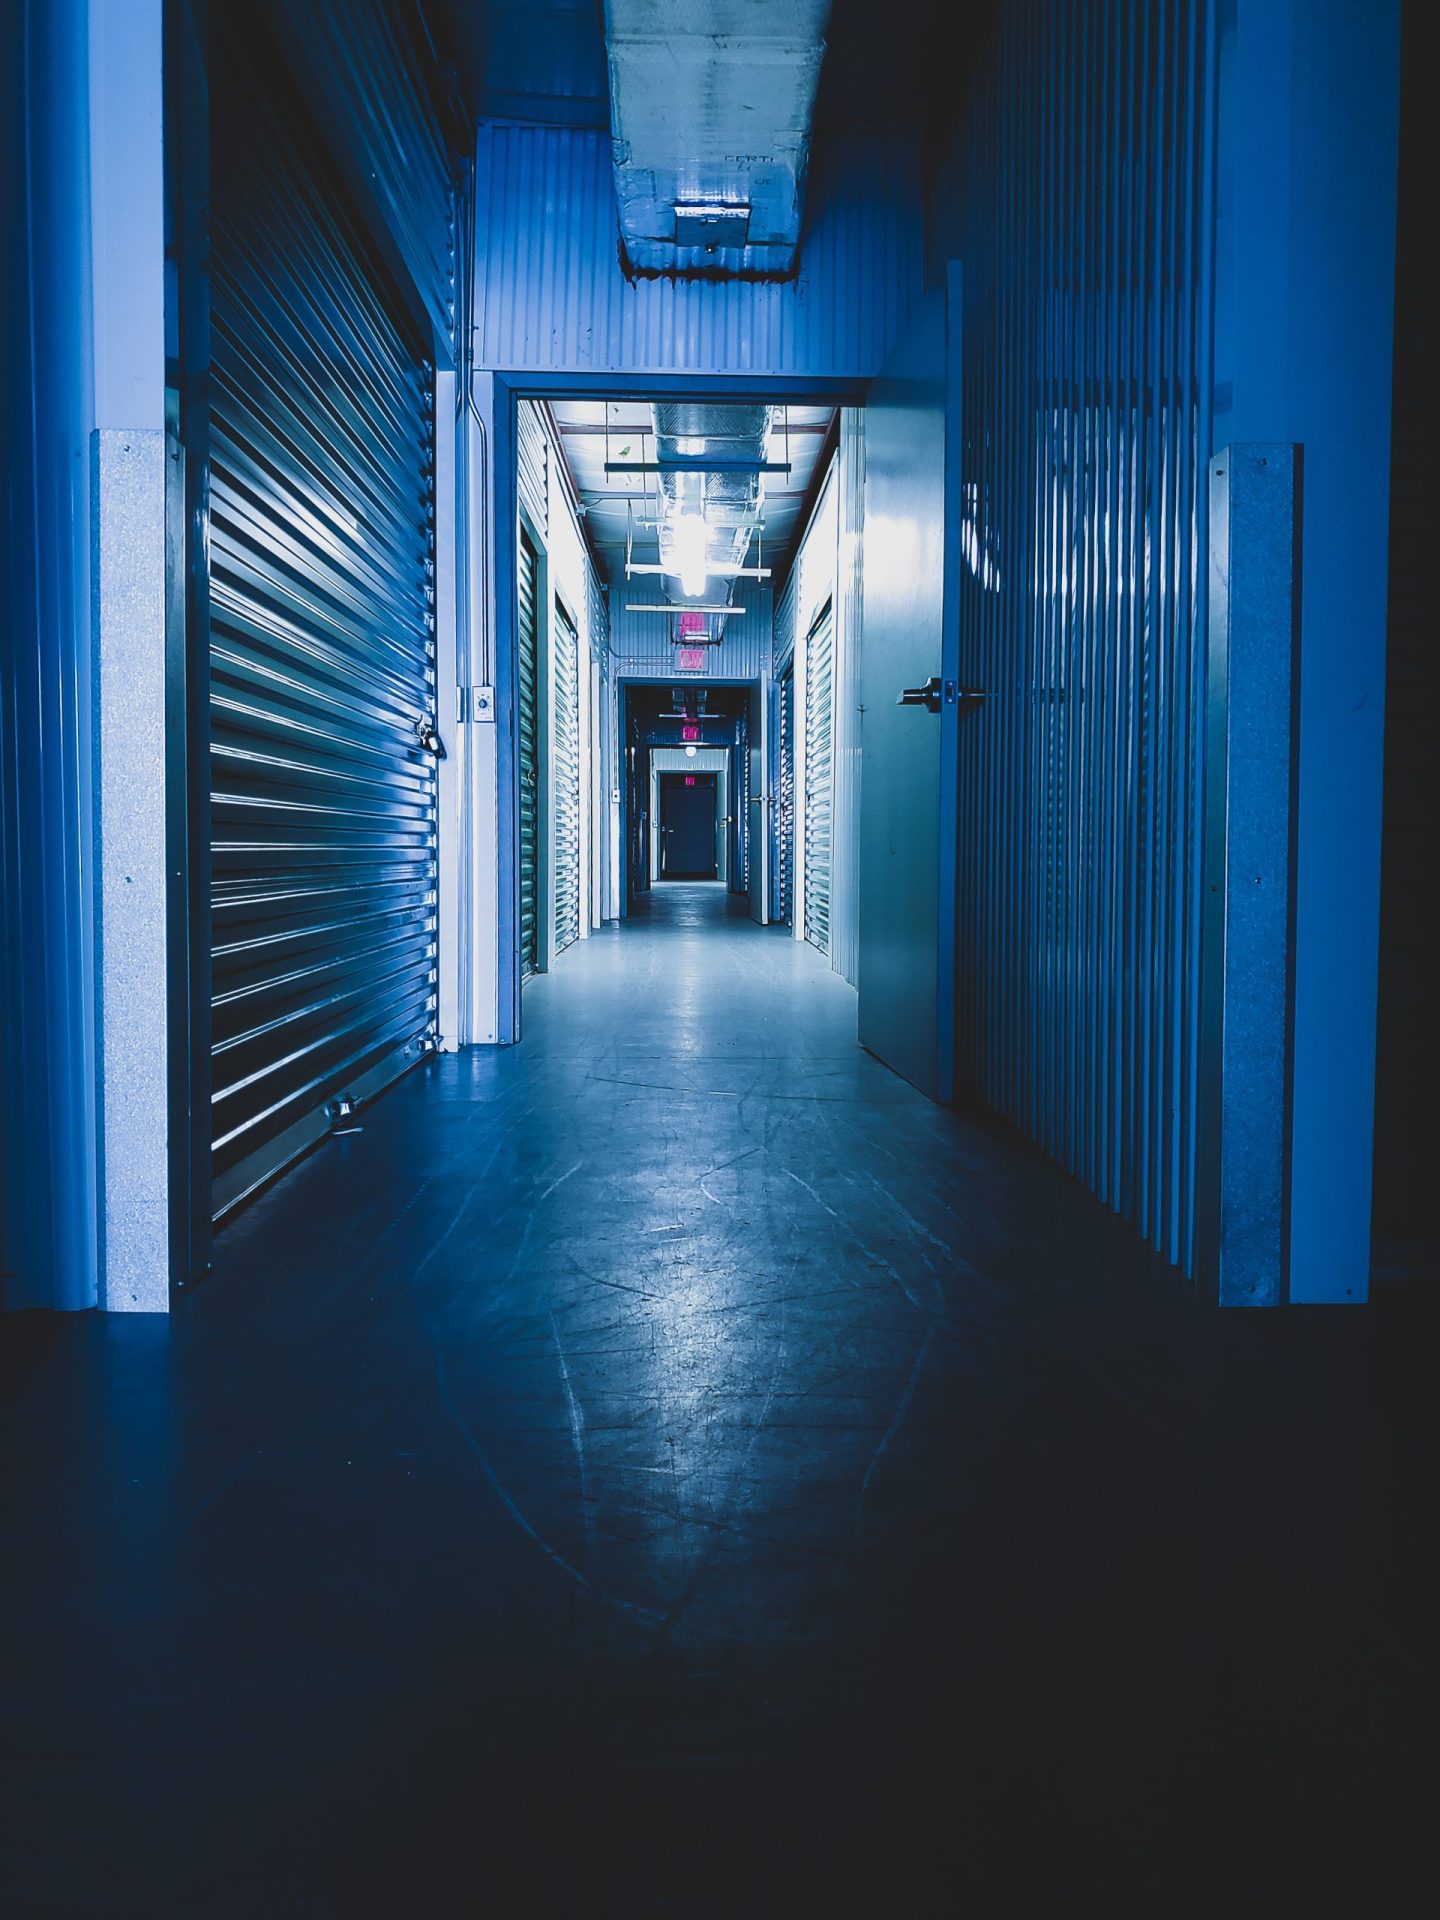 Storage Facility at night